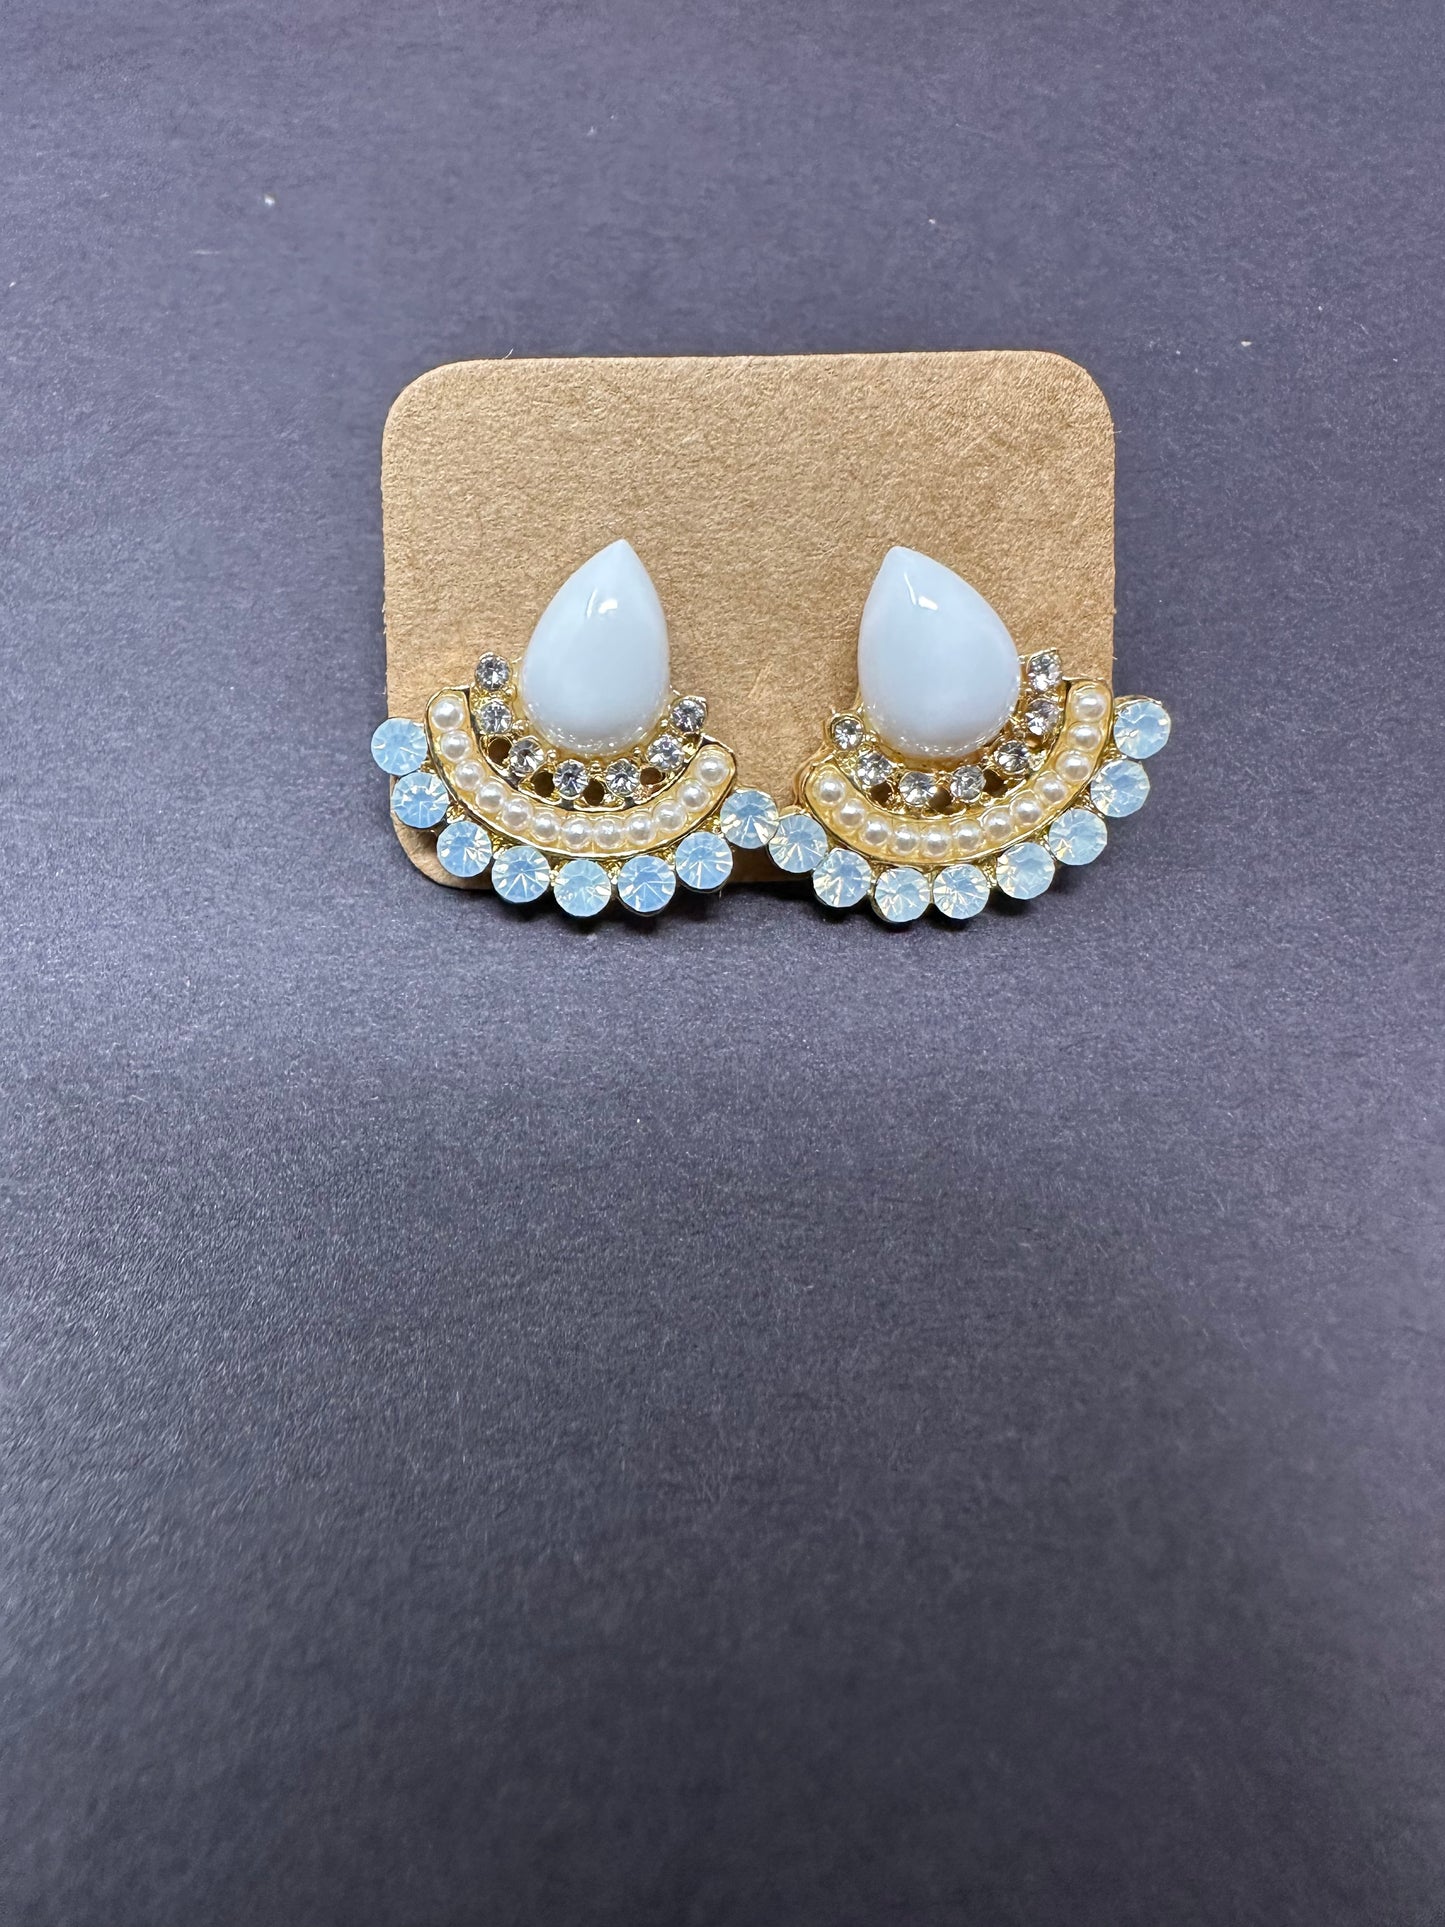 White Opal pearl earring